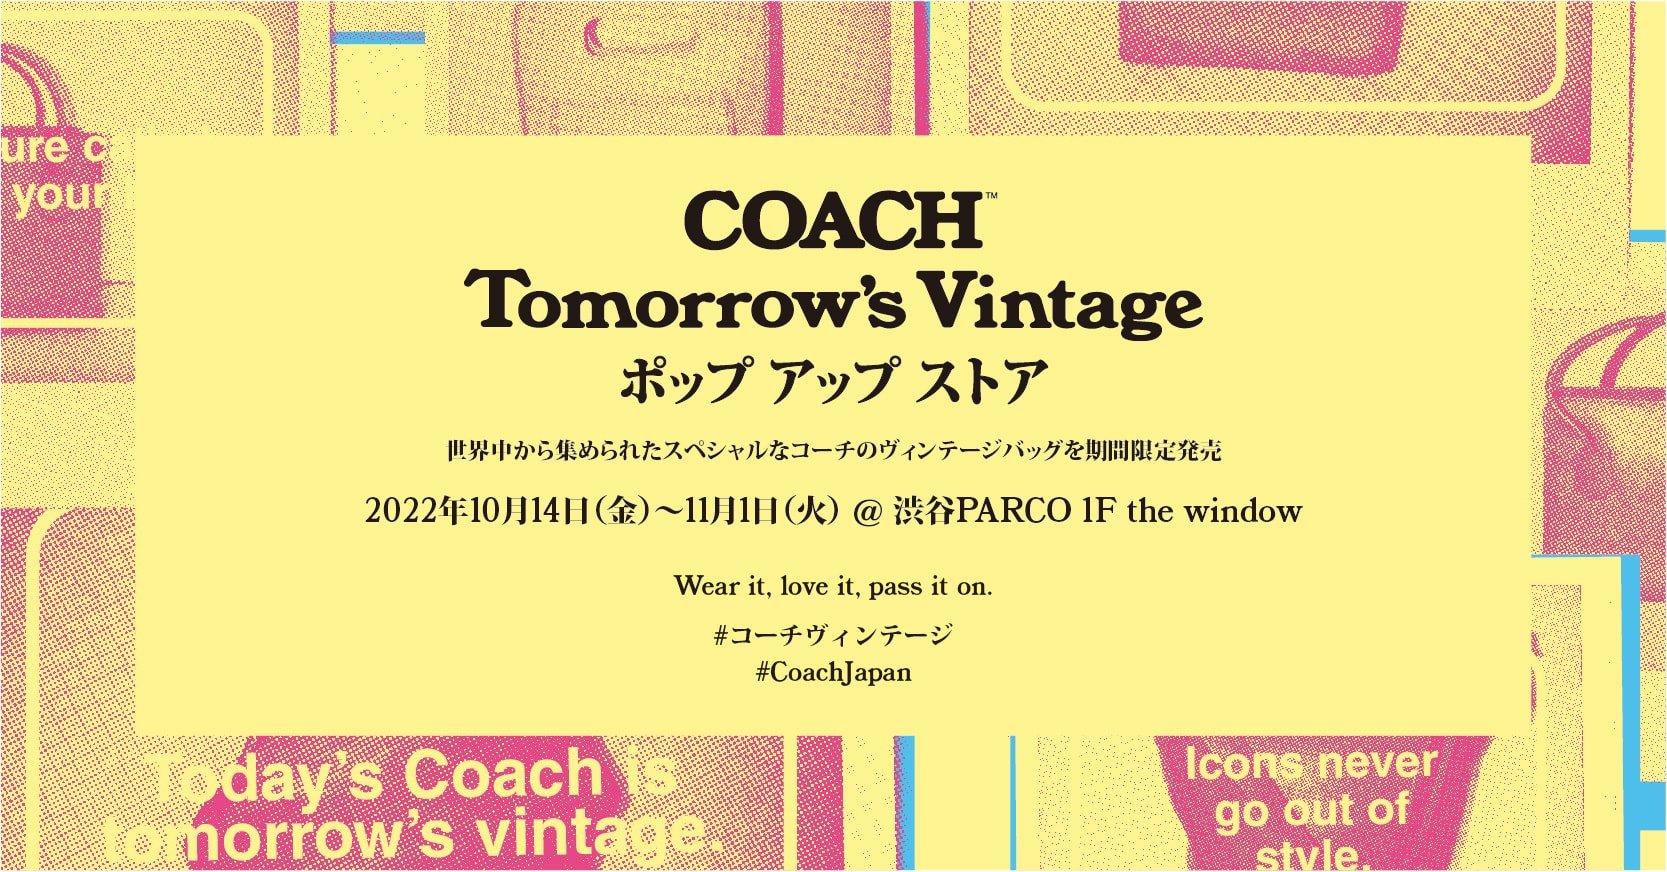 COACH Tomorrow's Vintage ポップアップストア